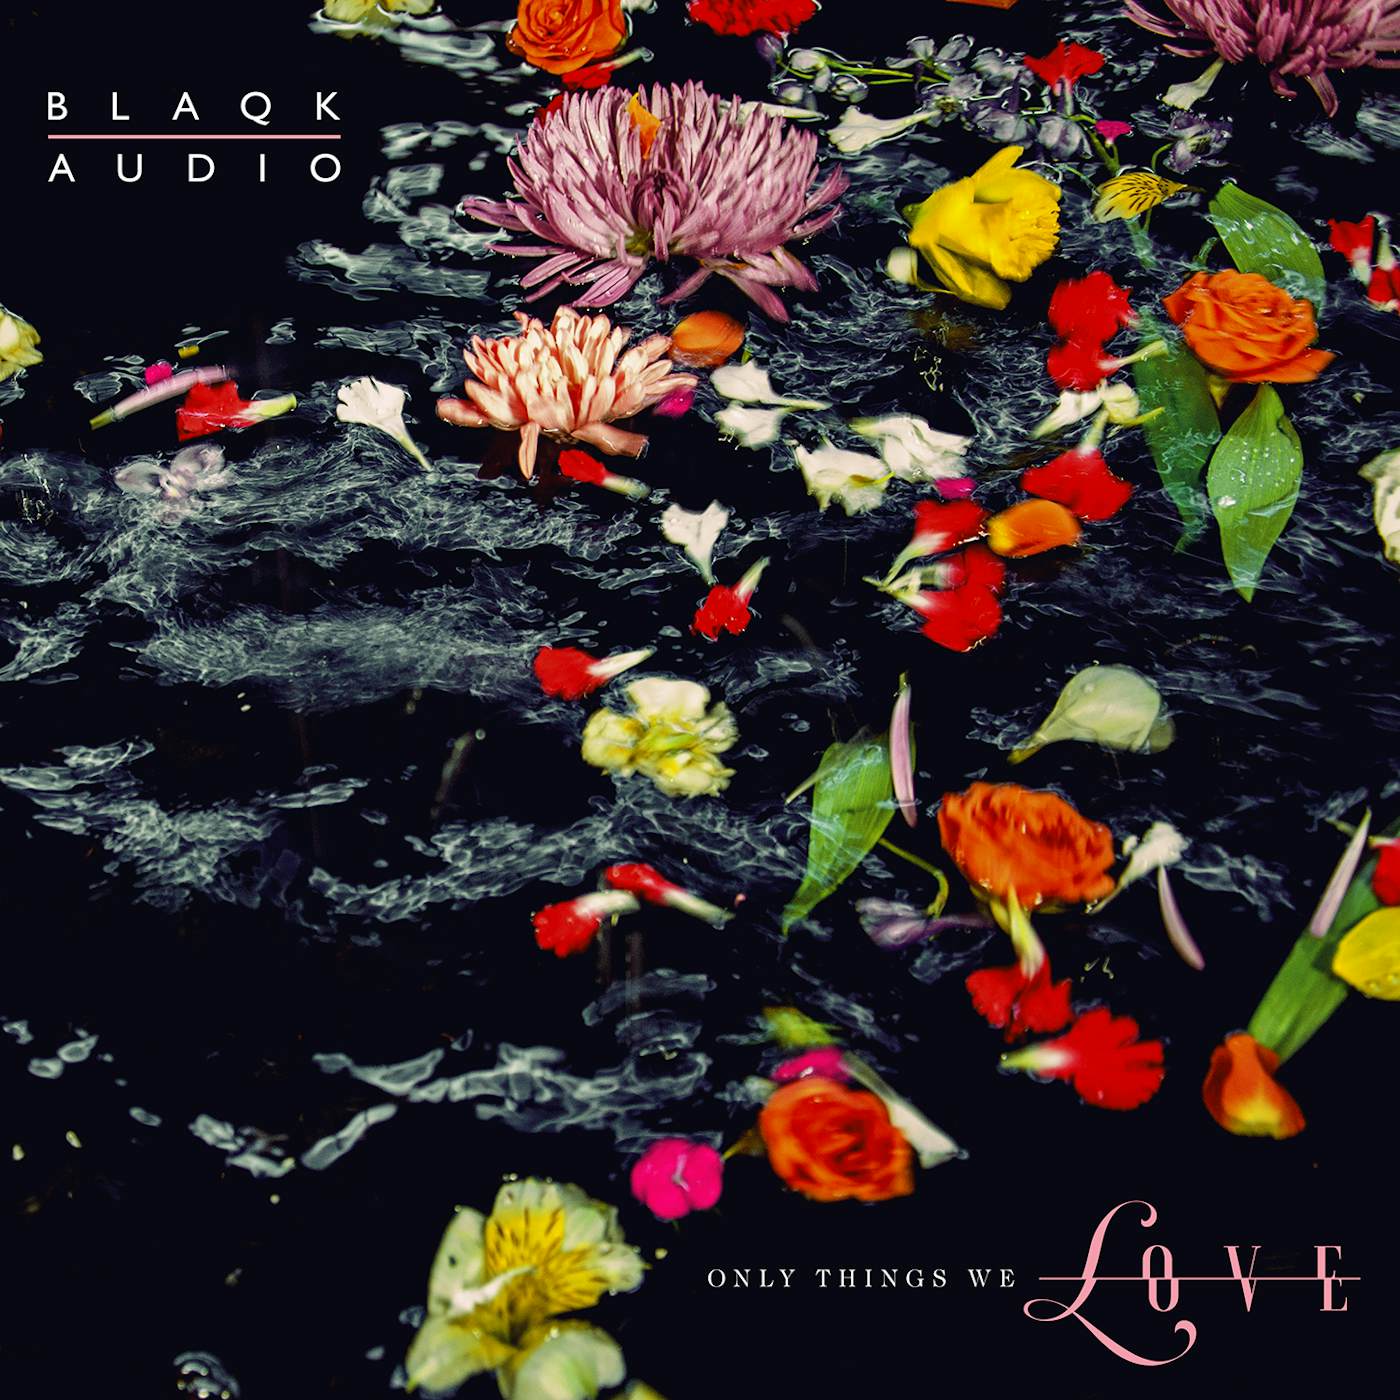 Blaqk Audio Only Things We Love CD